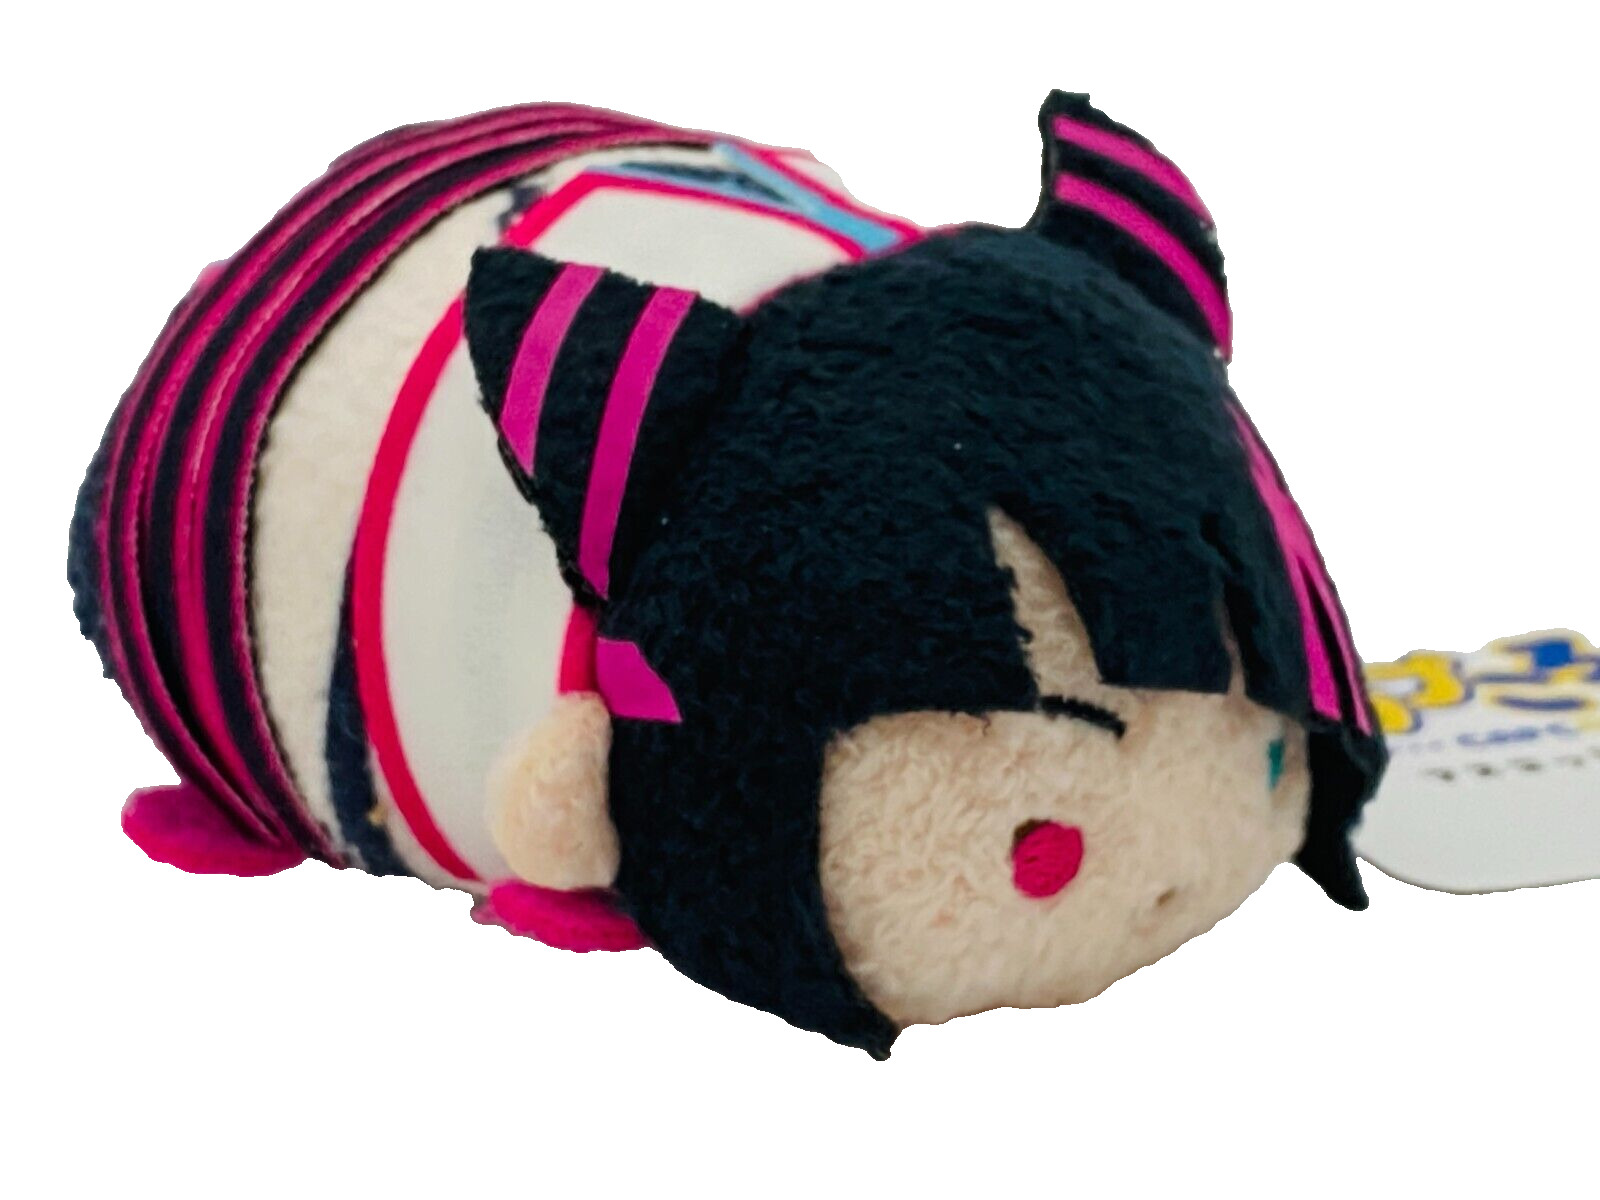 CAPCOM Capukoron mascot plush toy Han Juri Street Fighter 6 Stuffed toy Doll